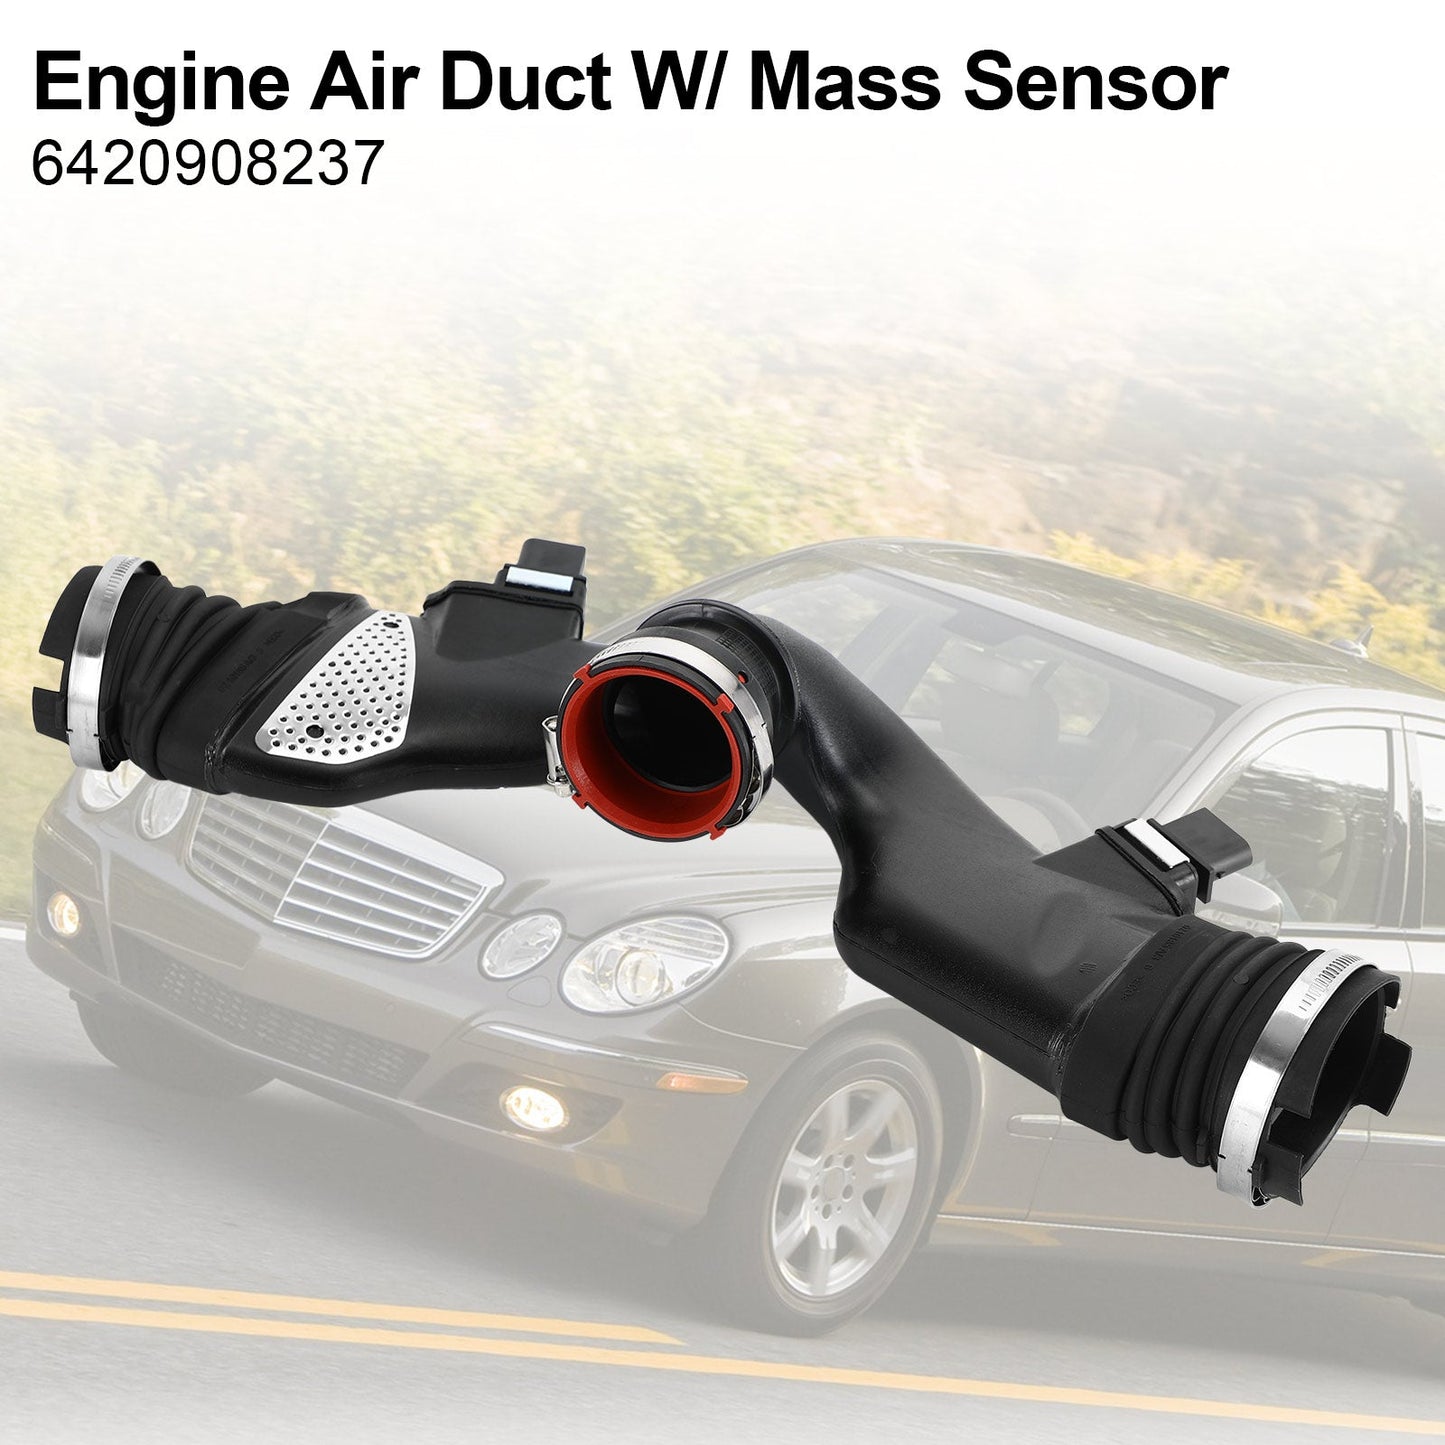 Engine Air Duct W/ Mass Sensor for Mercedes-Benz X164 W164 W211 W251 6420908237